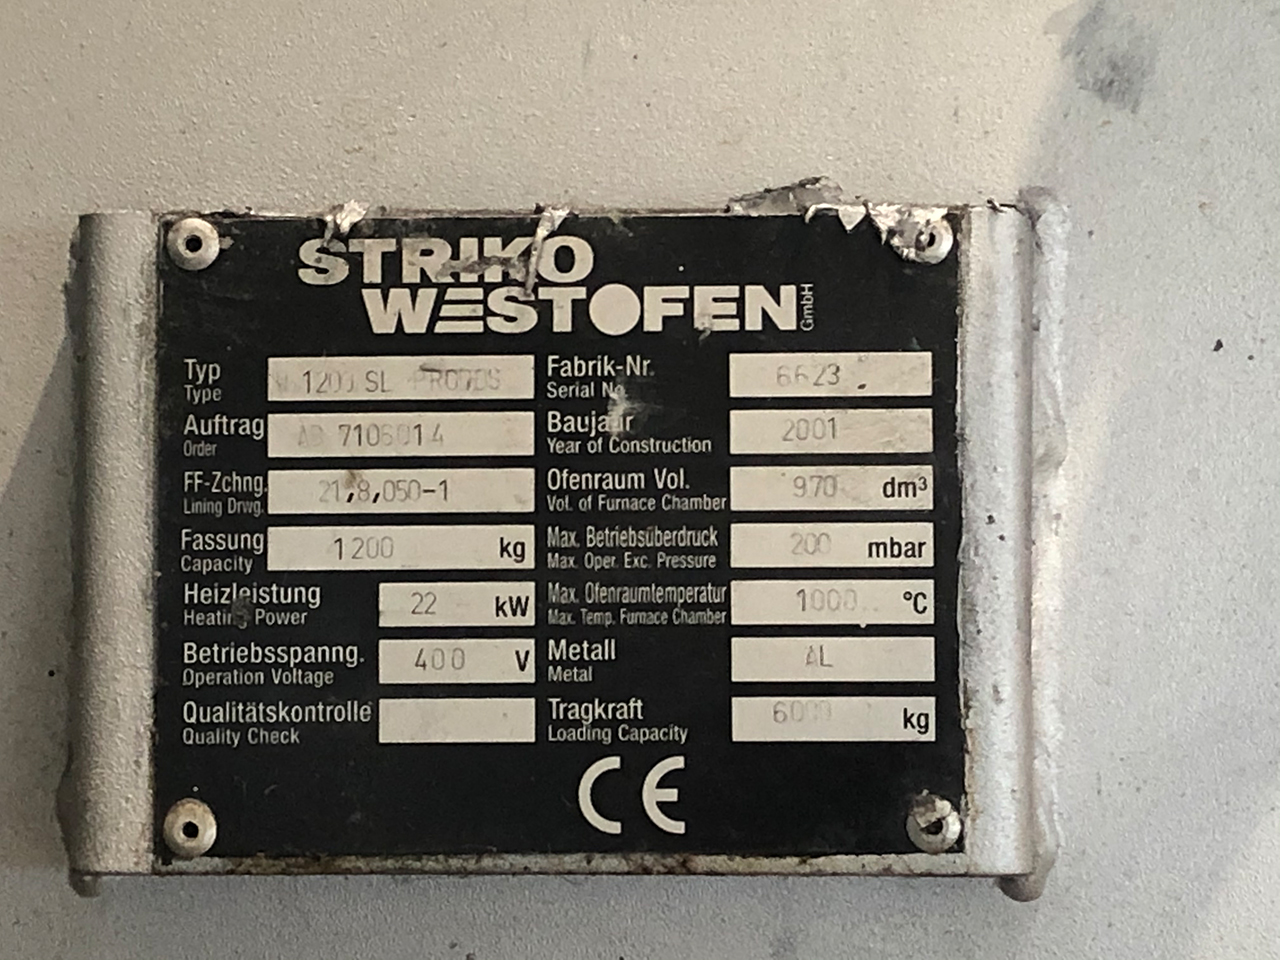 Cuptor de dozare StrikoWestofen W 1200 SL ProDos DPC DPC O1814, folosit